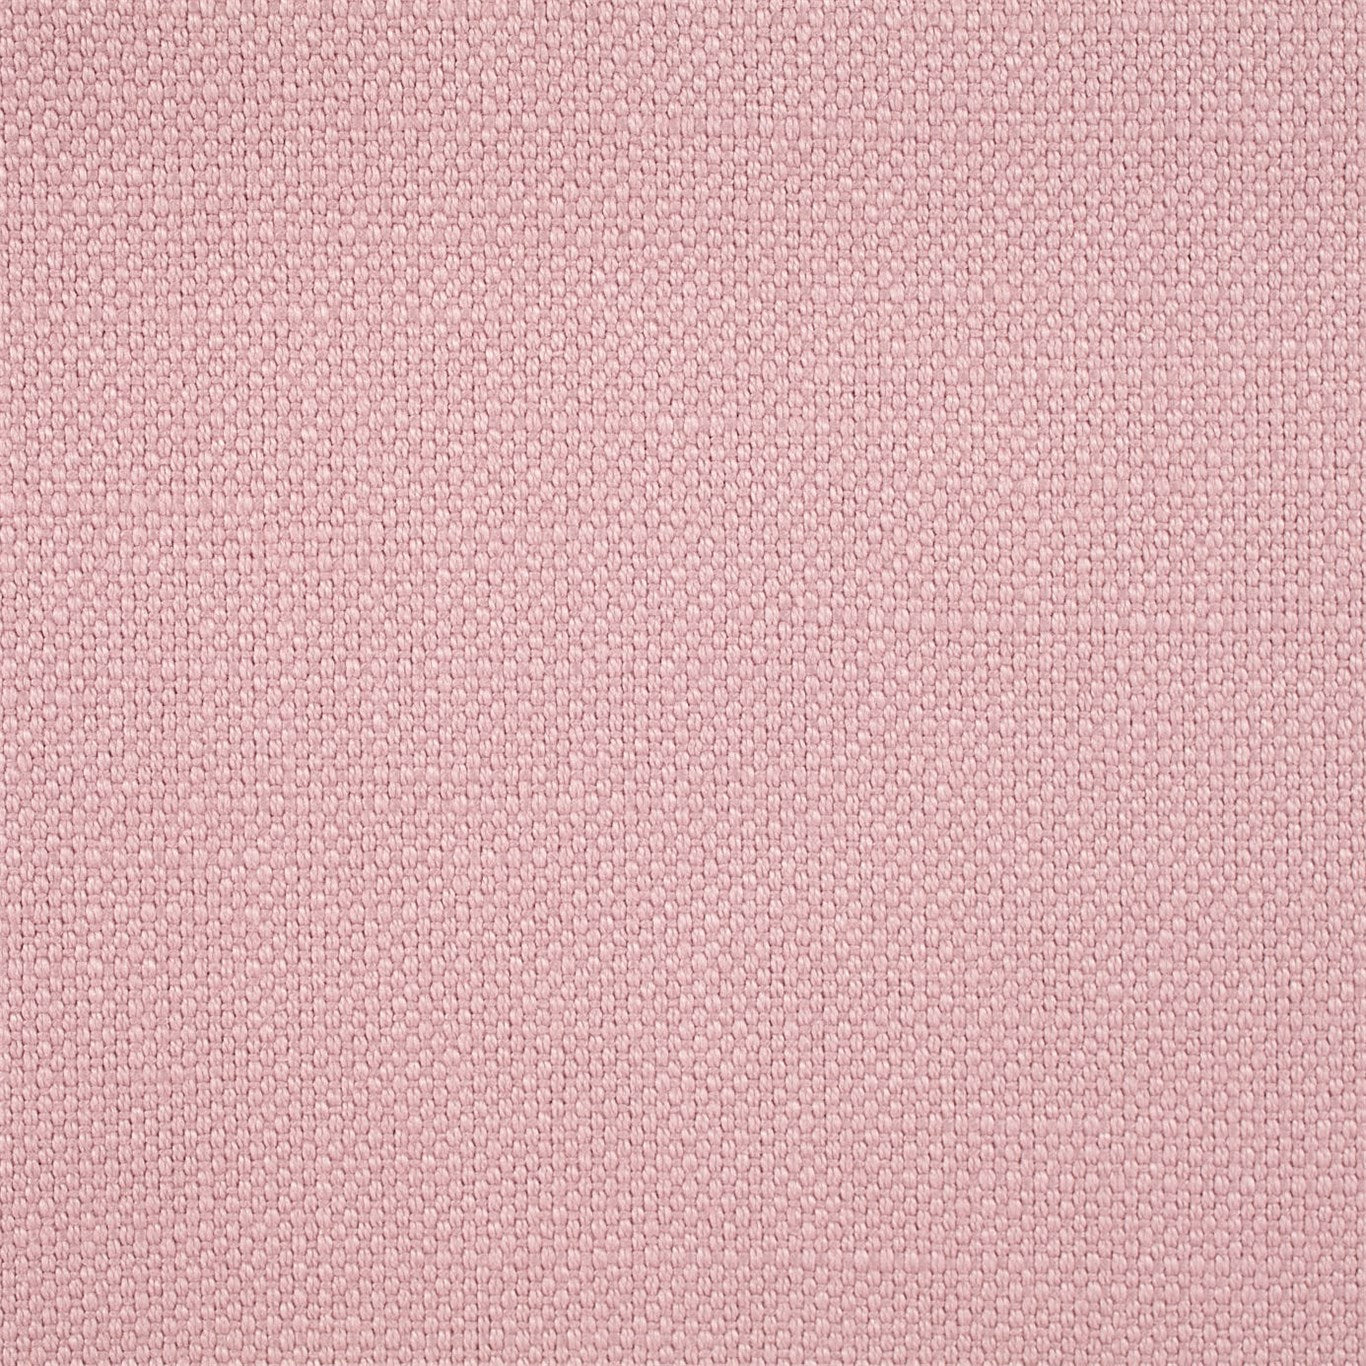 Arley Fabric by Sanderson - DALY245814 - Petal